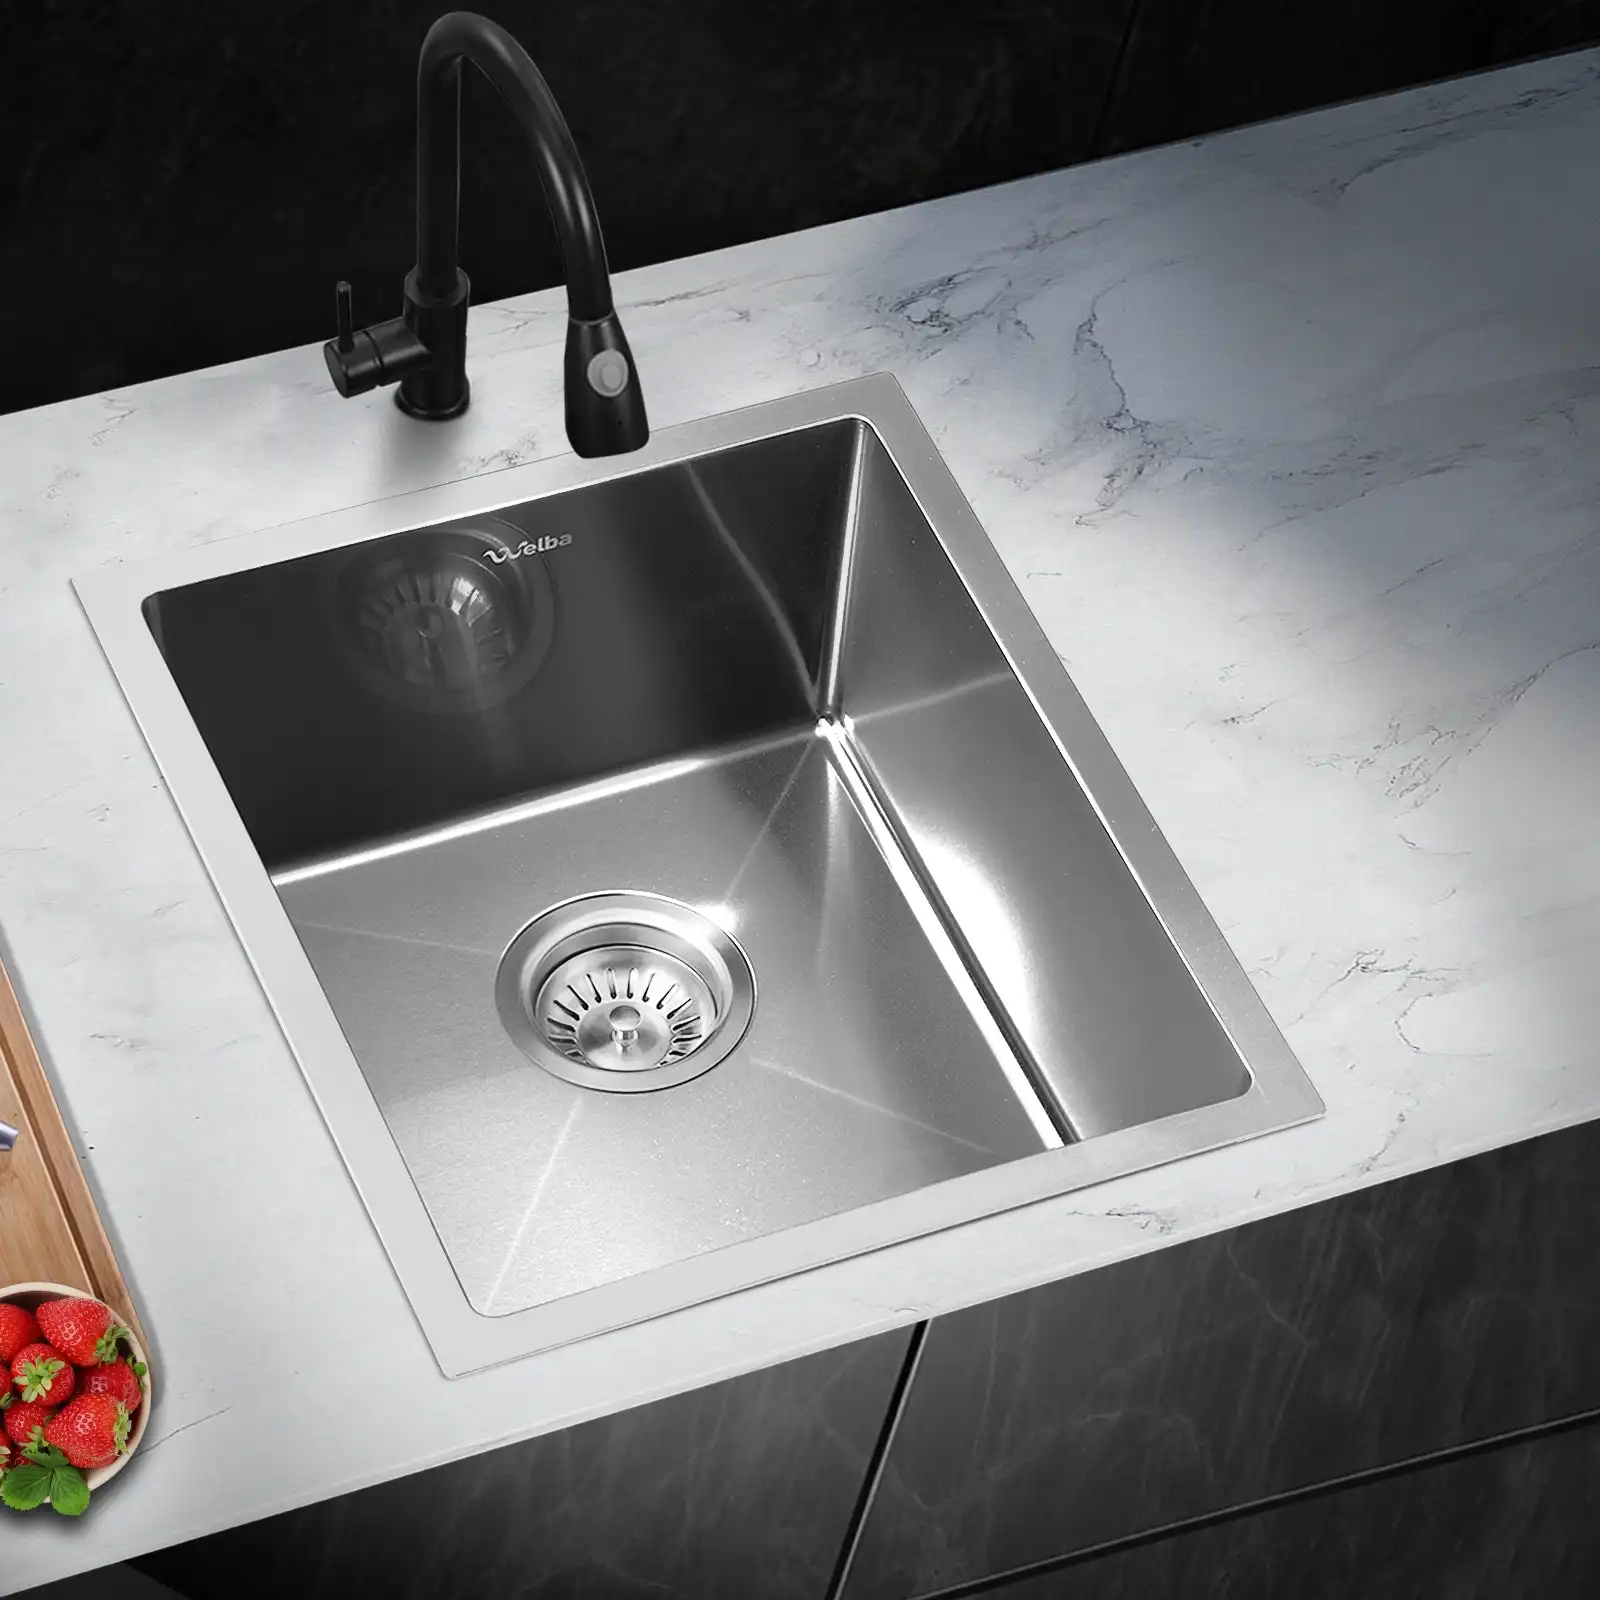 Welba Kitchen Sink Stainless Steel Bathroom Laundry Basin Single Silver 44X38CM